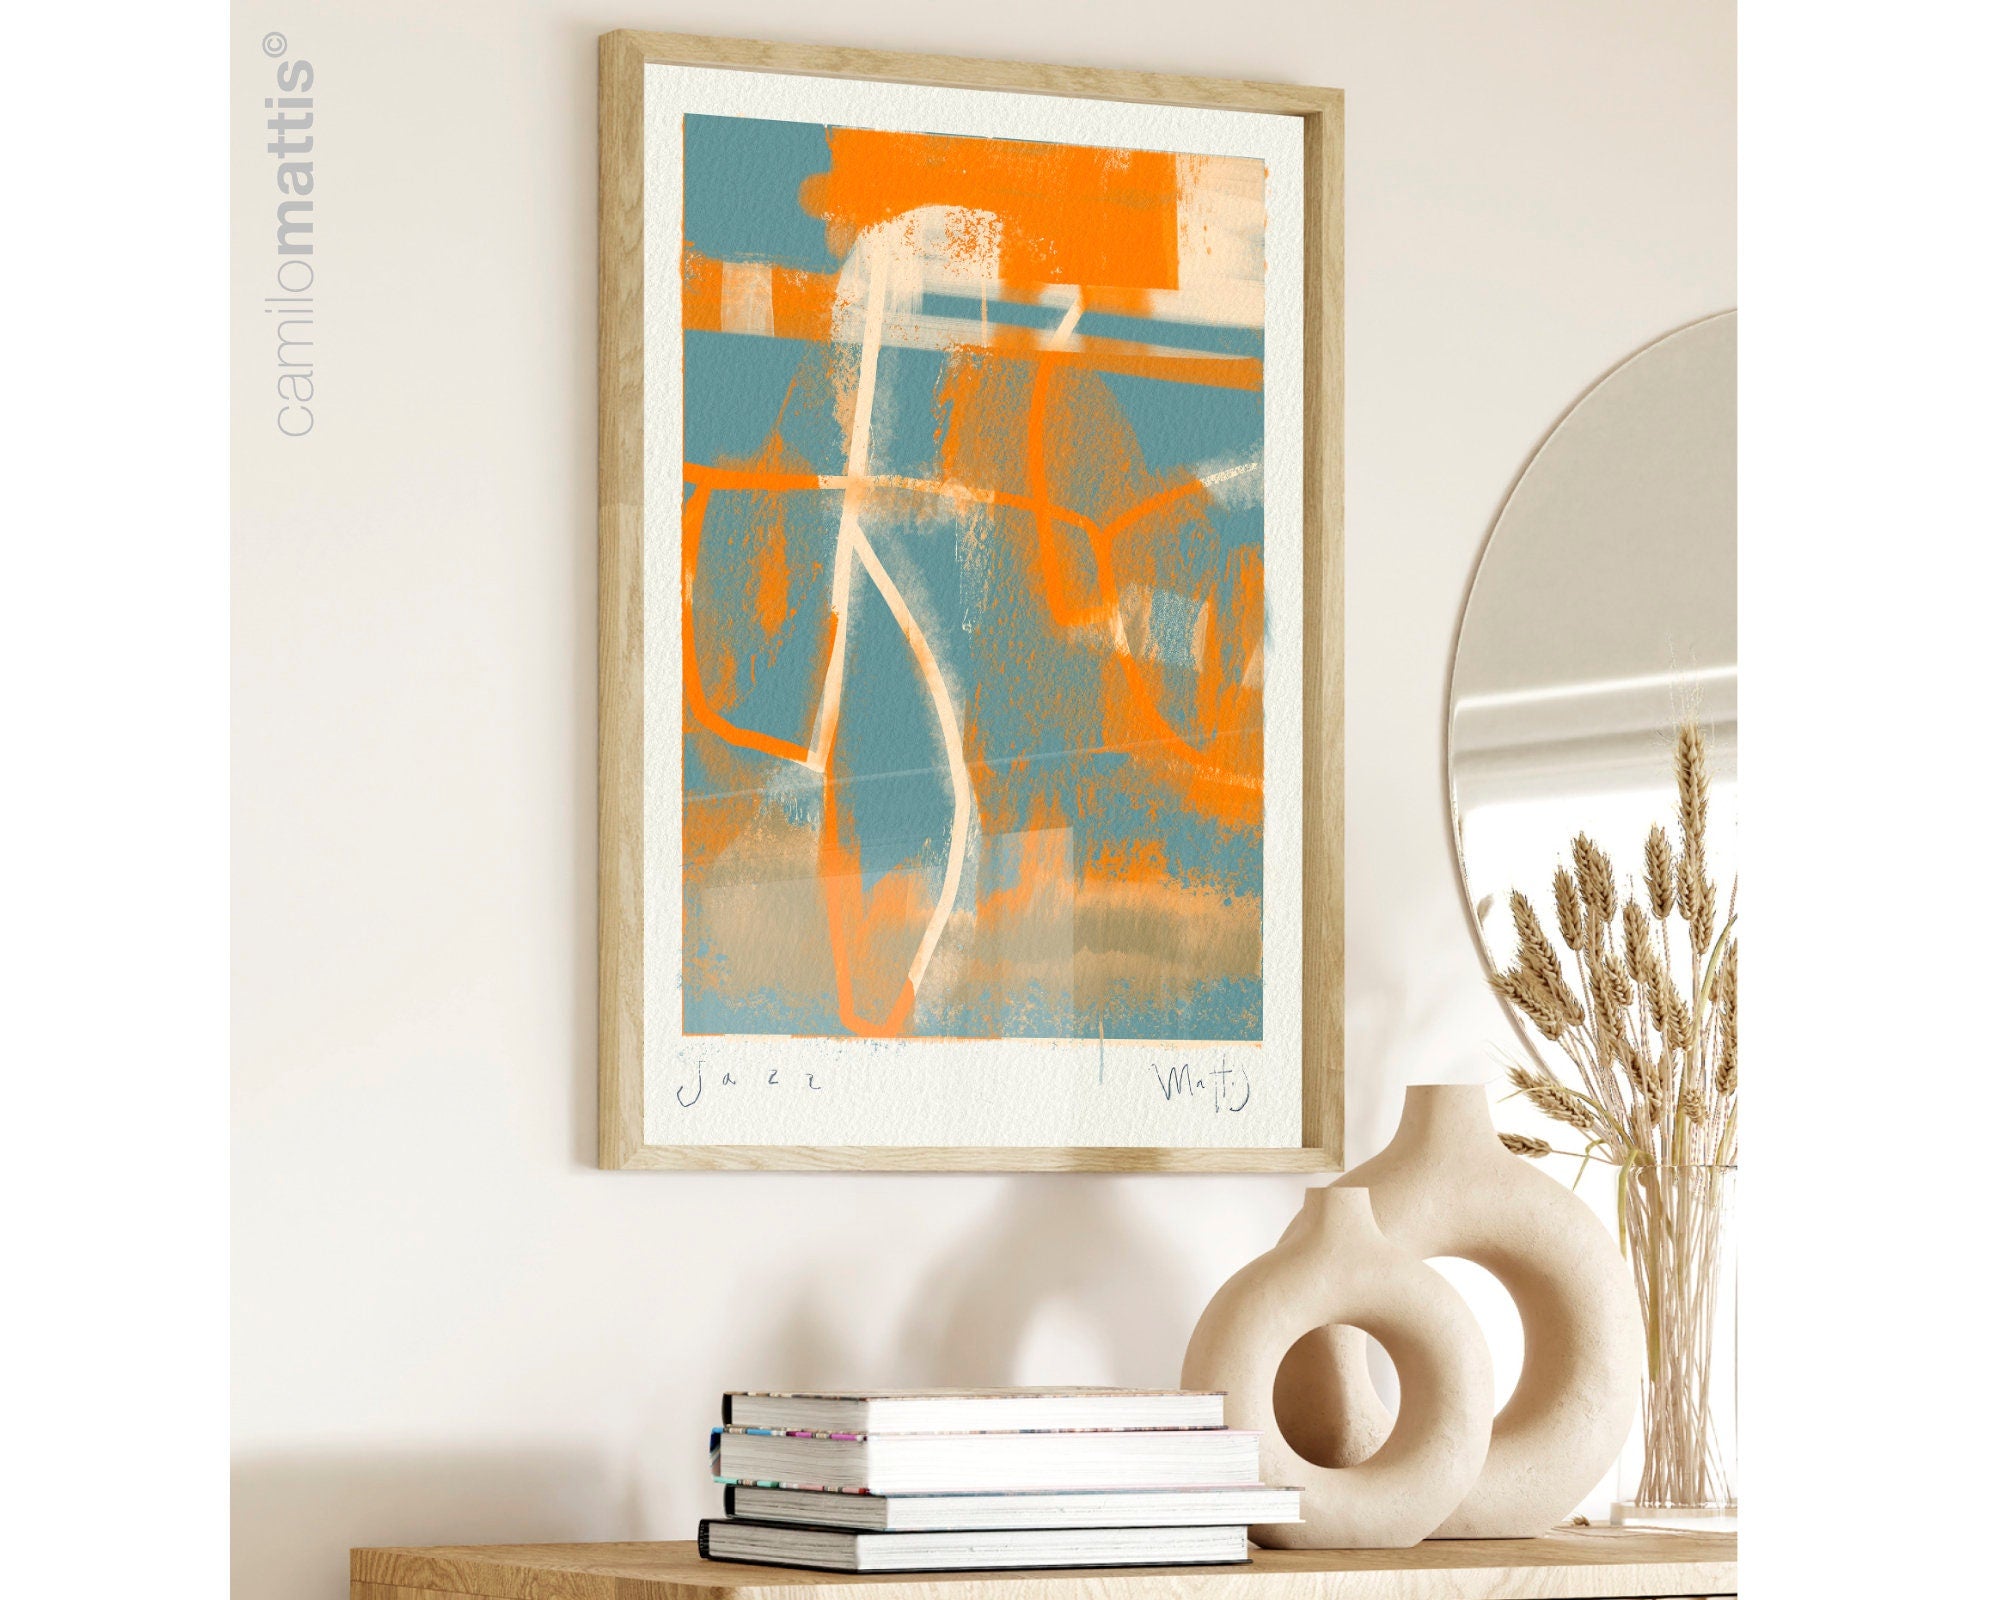 Jazz in NY Orange and blue large poster print, minimalist modern art appartement decor by Camilo Mattis